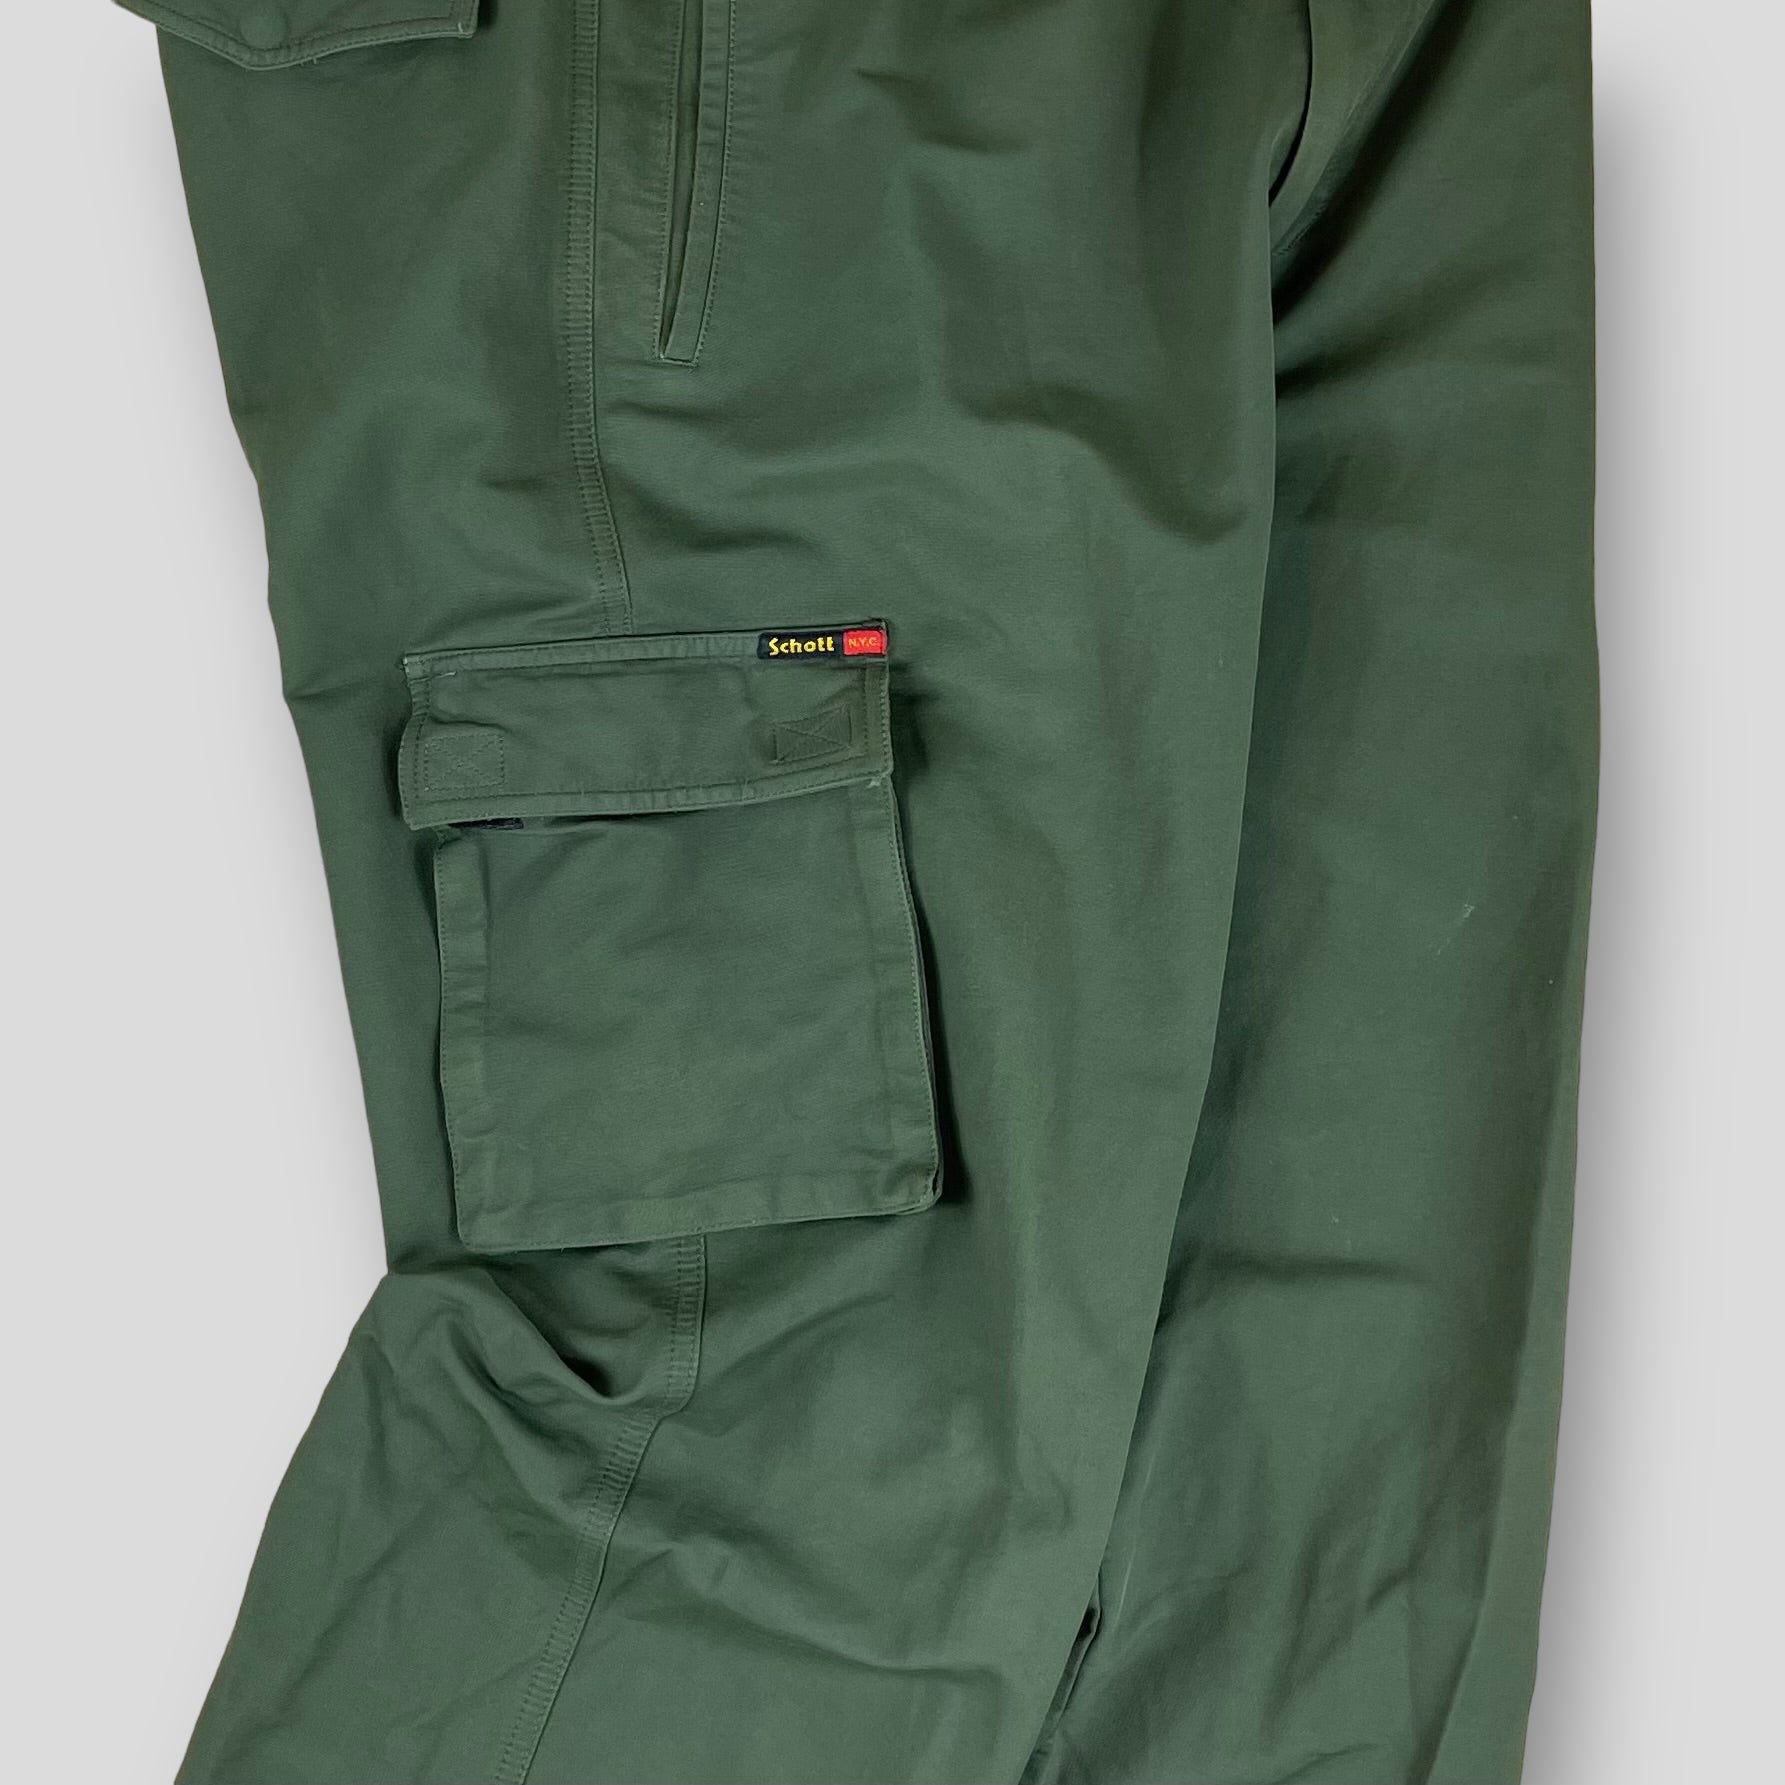 Schott cargo trousers